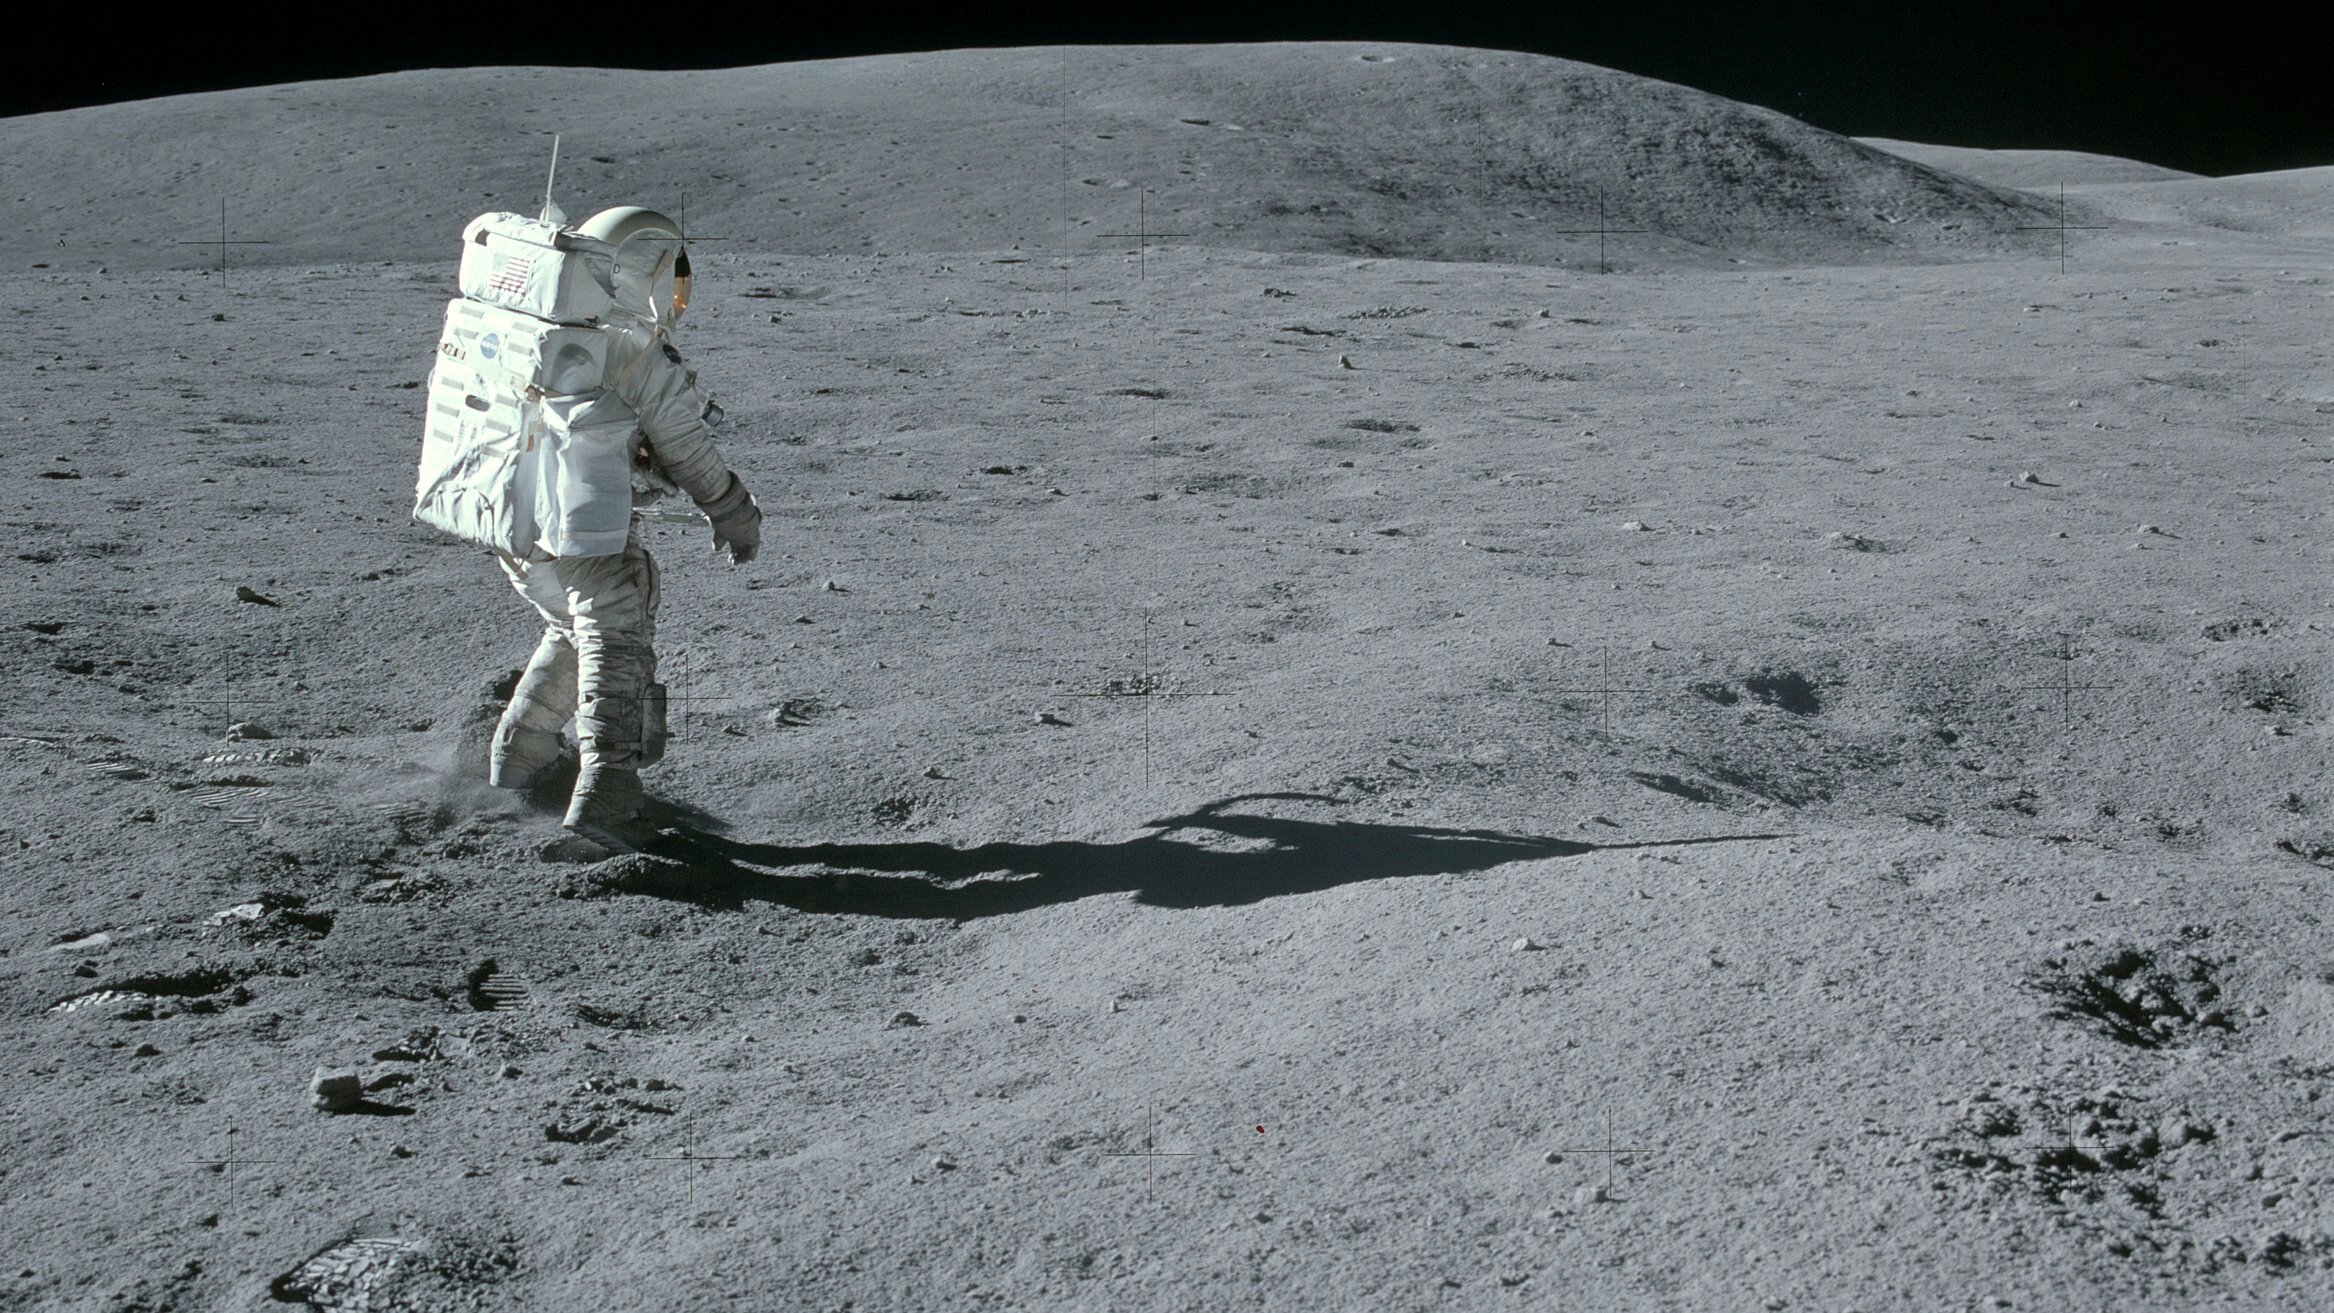 Аполлон-16 астронавт на Луне. Миссия Аполлон 16.